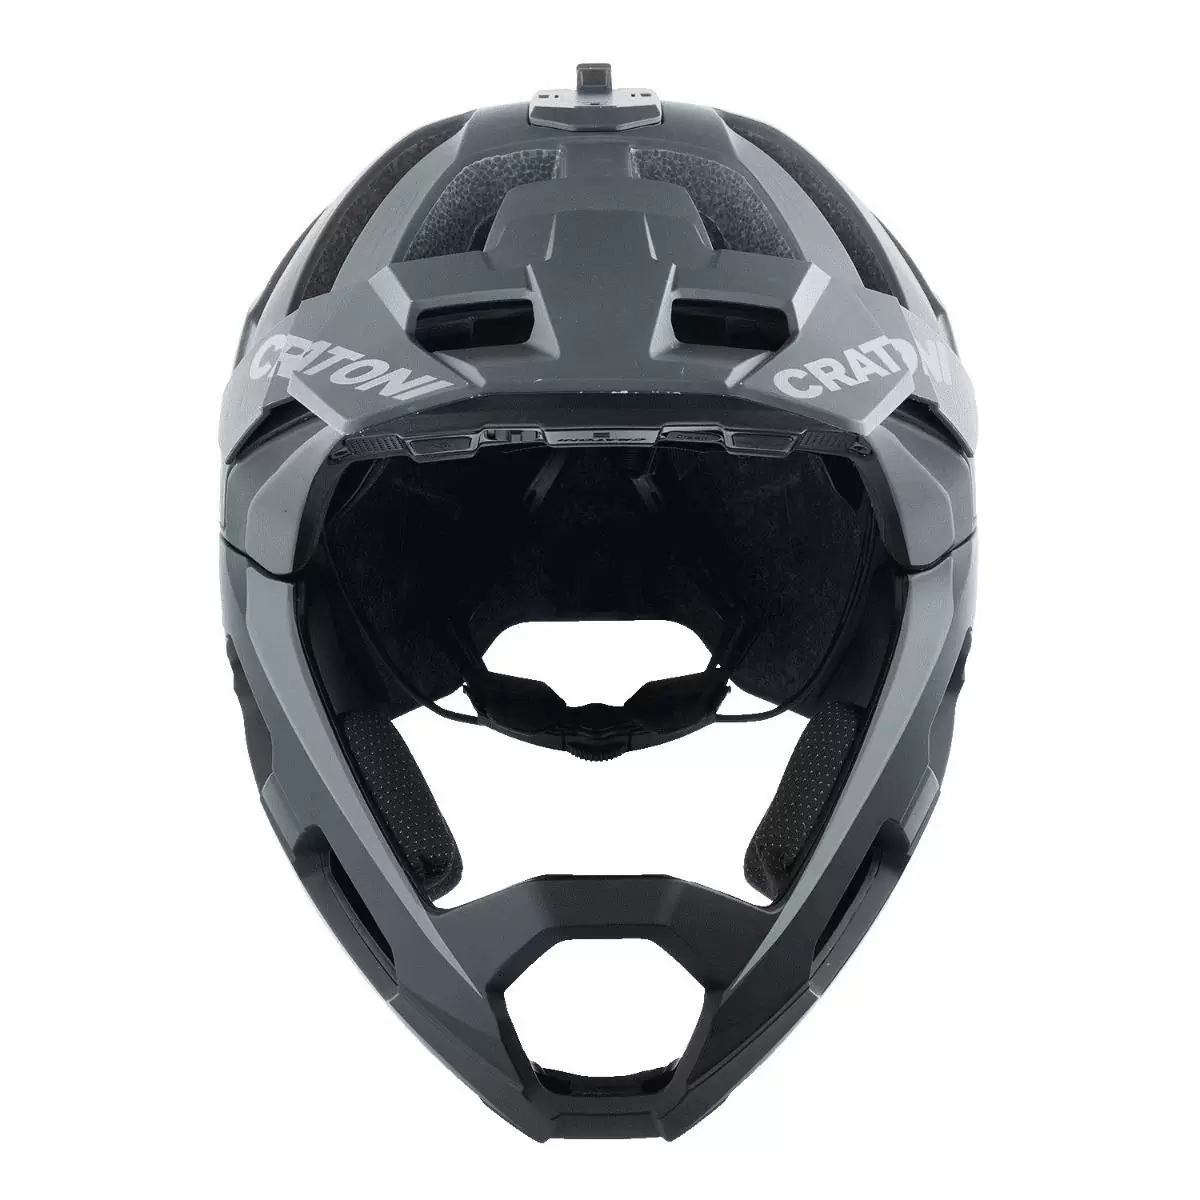 Madroc Pro Smart helmet Bluetooth black size M/L (58-61cm) #3